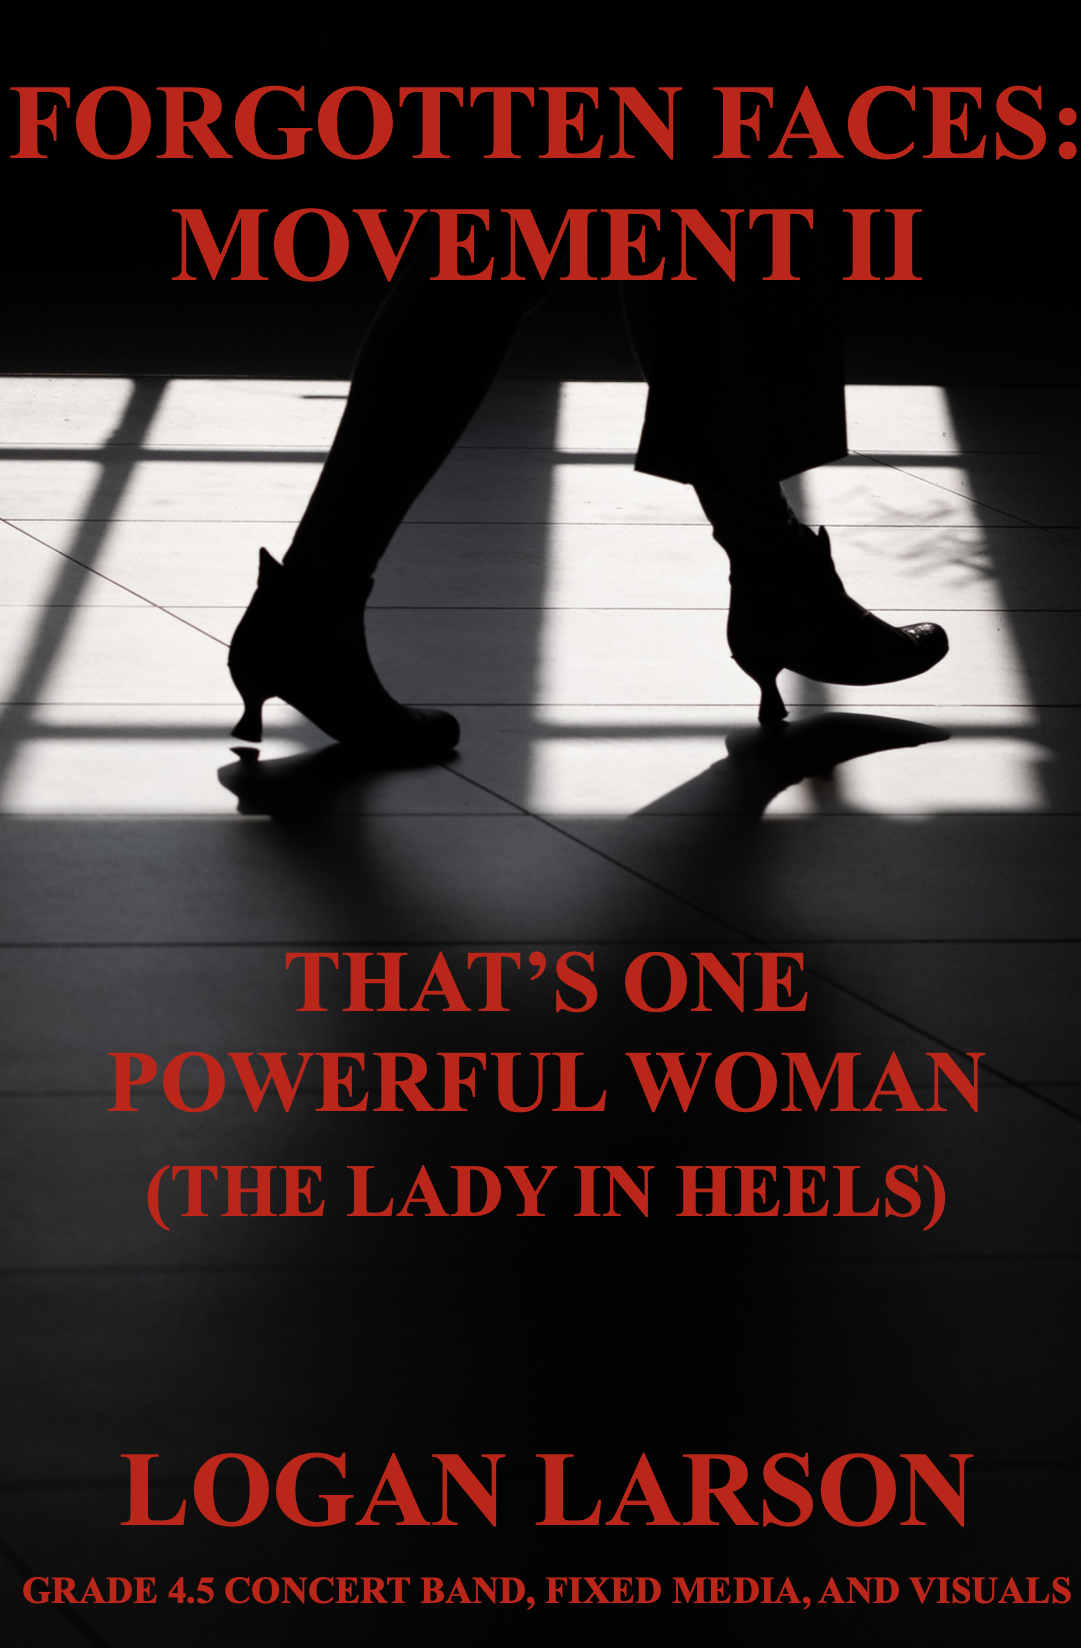 That's One Powerful Woman by Logan Larson